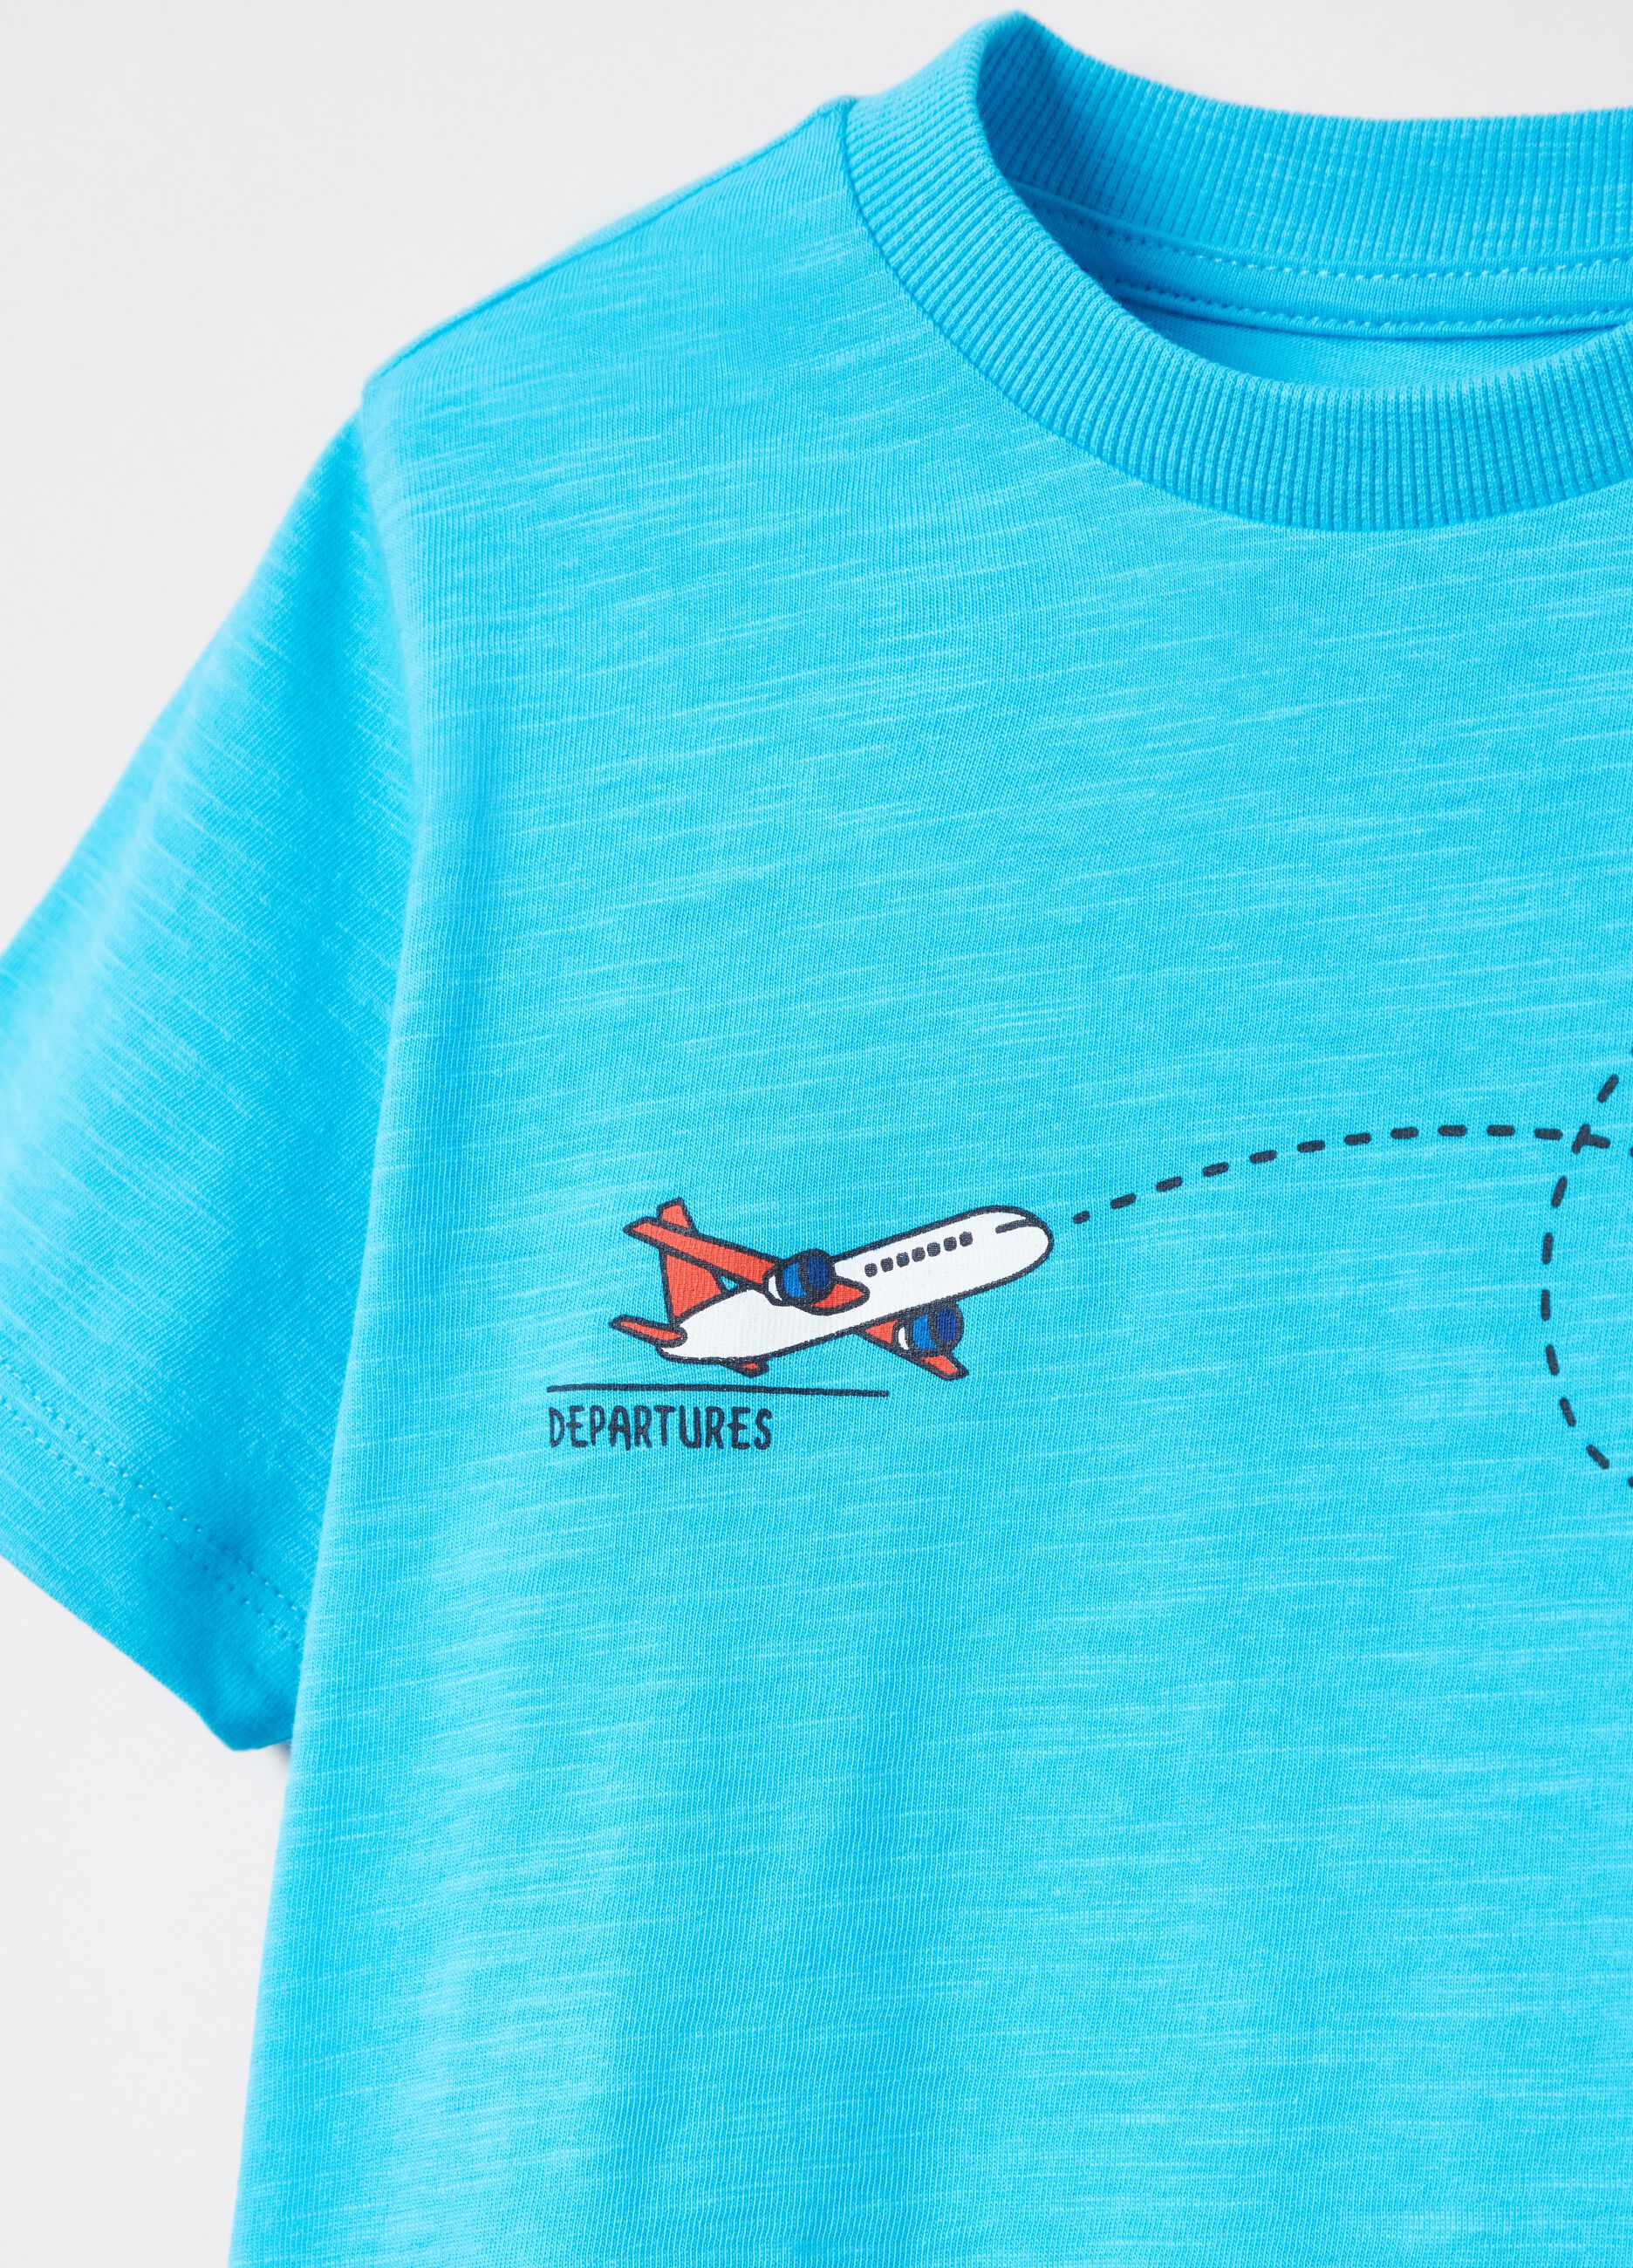 Cotton T-shirt with plane print